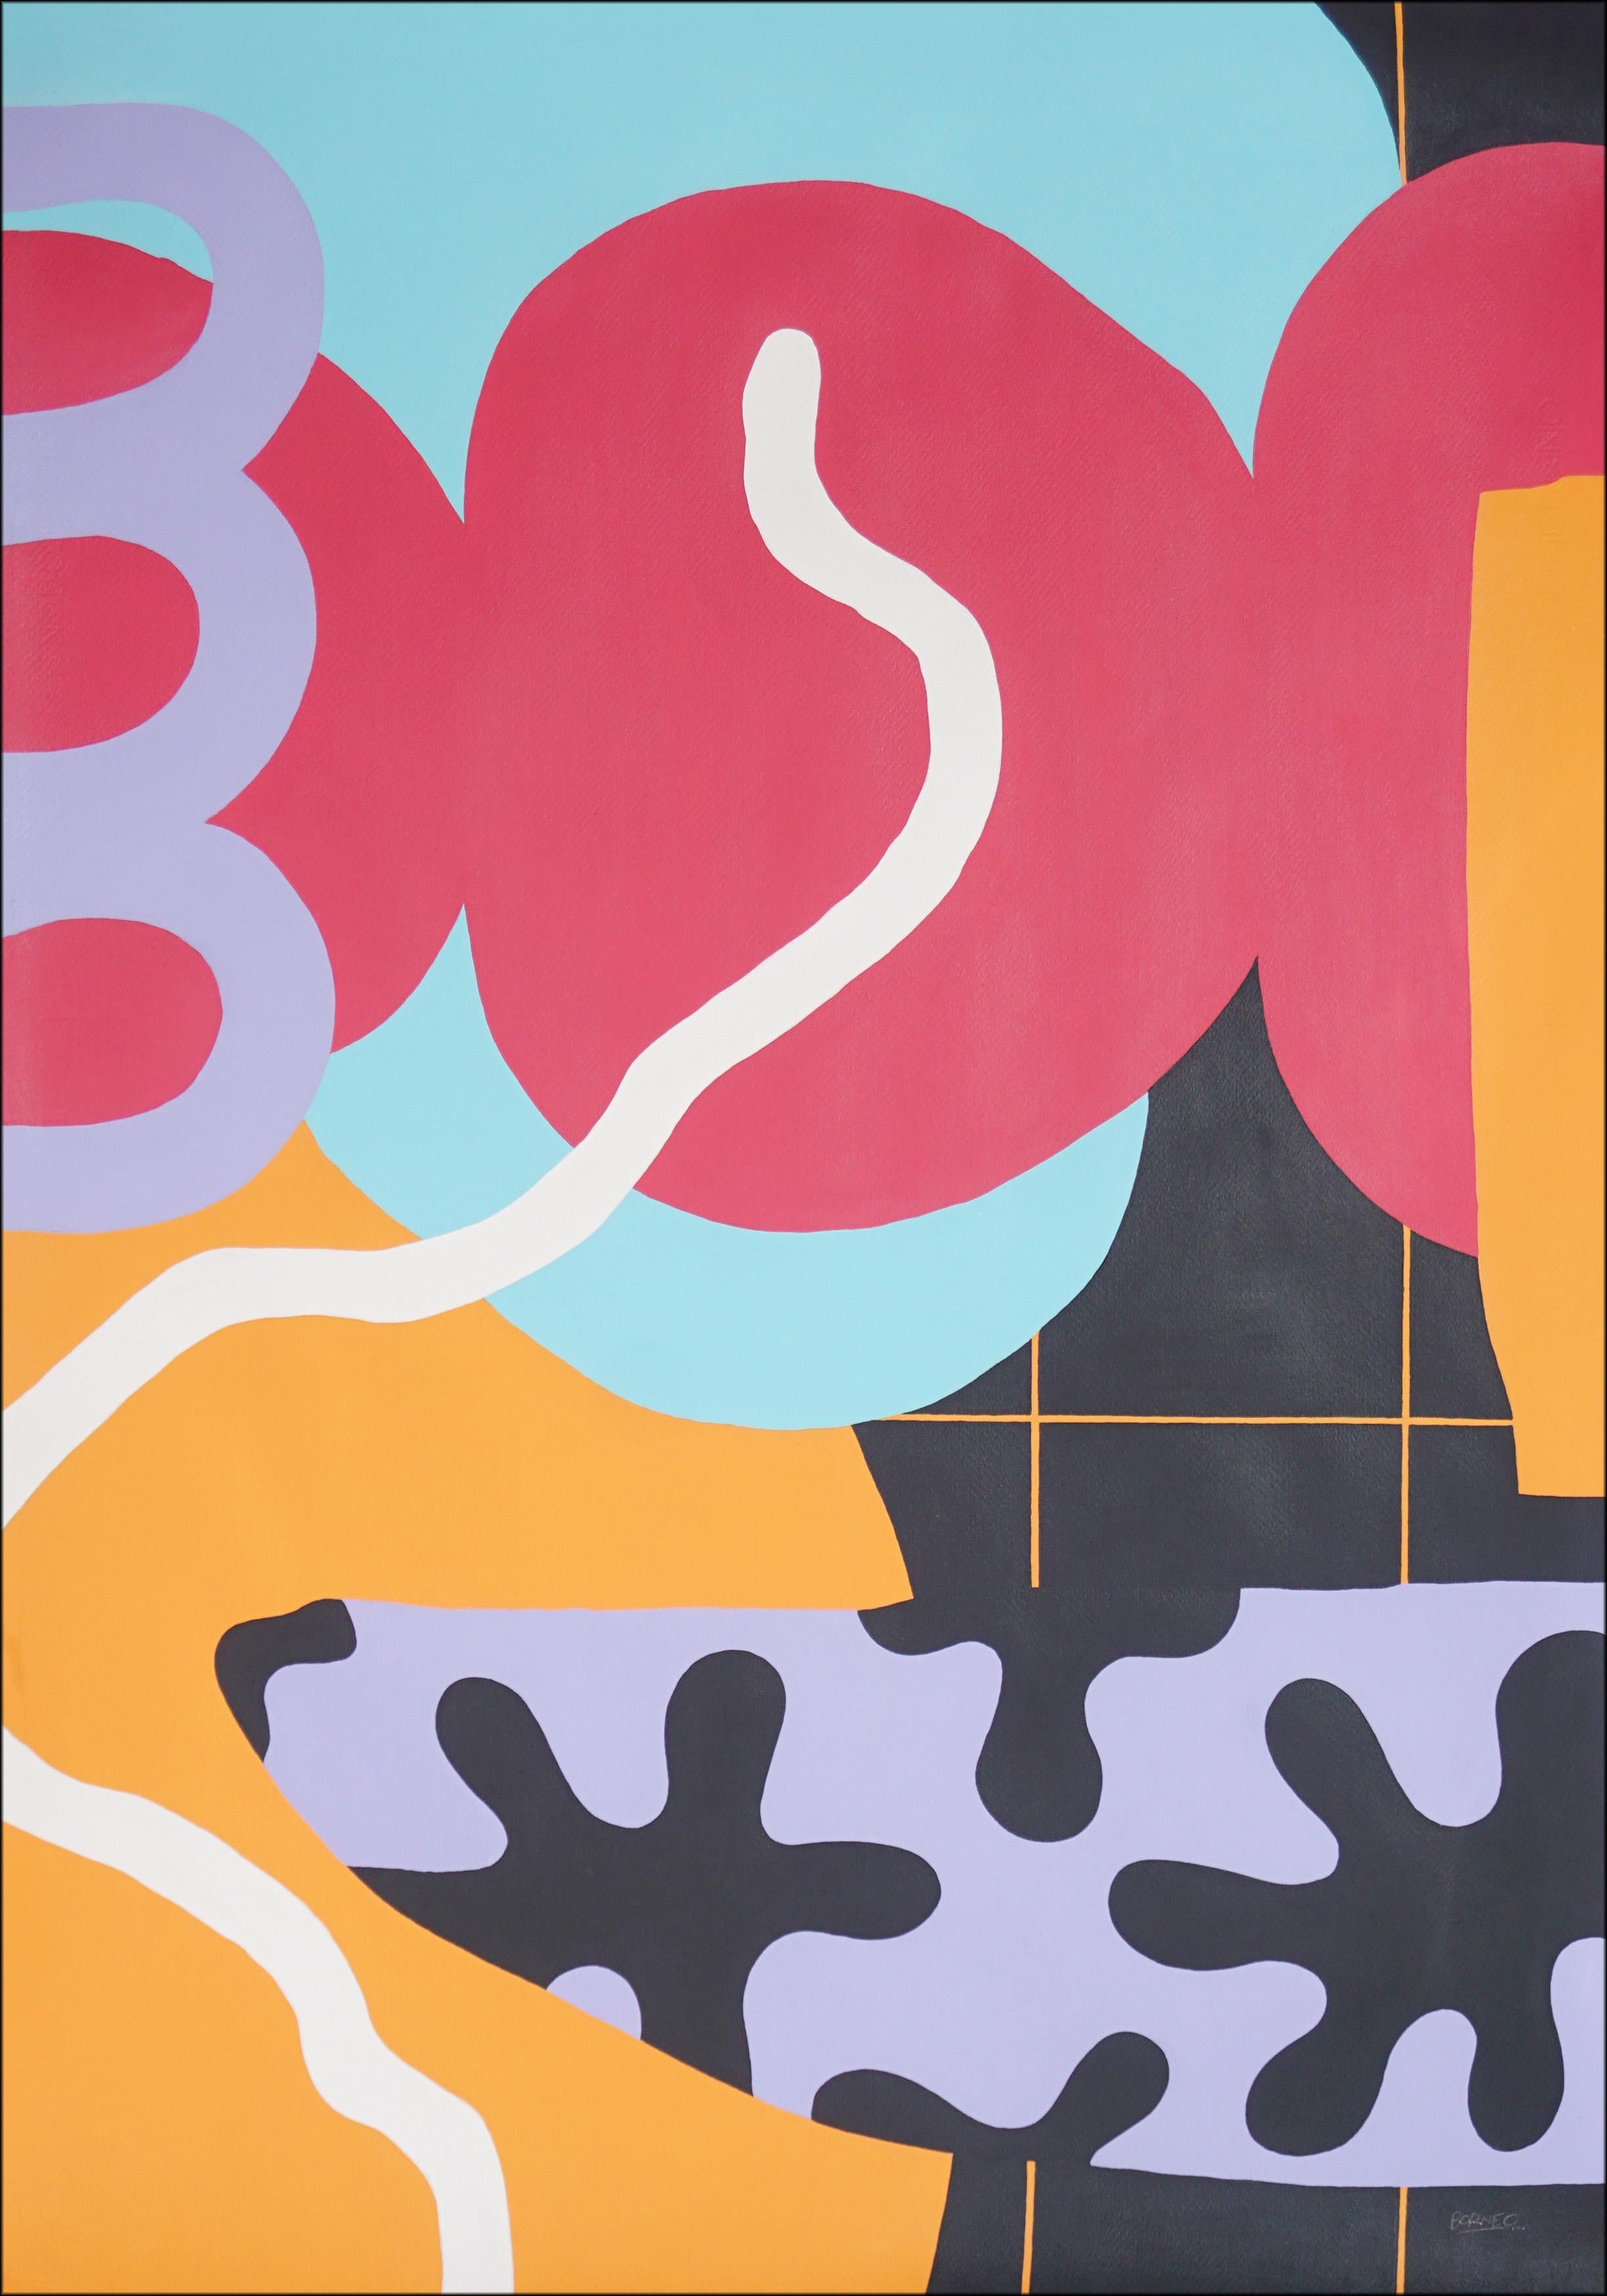 Borneo, Maikol Dasousa  Abstract Painting - New Pop Painting, Pink, Black Urban Floral Shapes, Vivid Tones, Orange Patterns